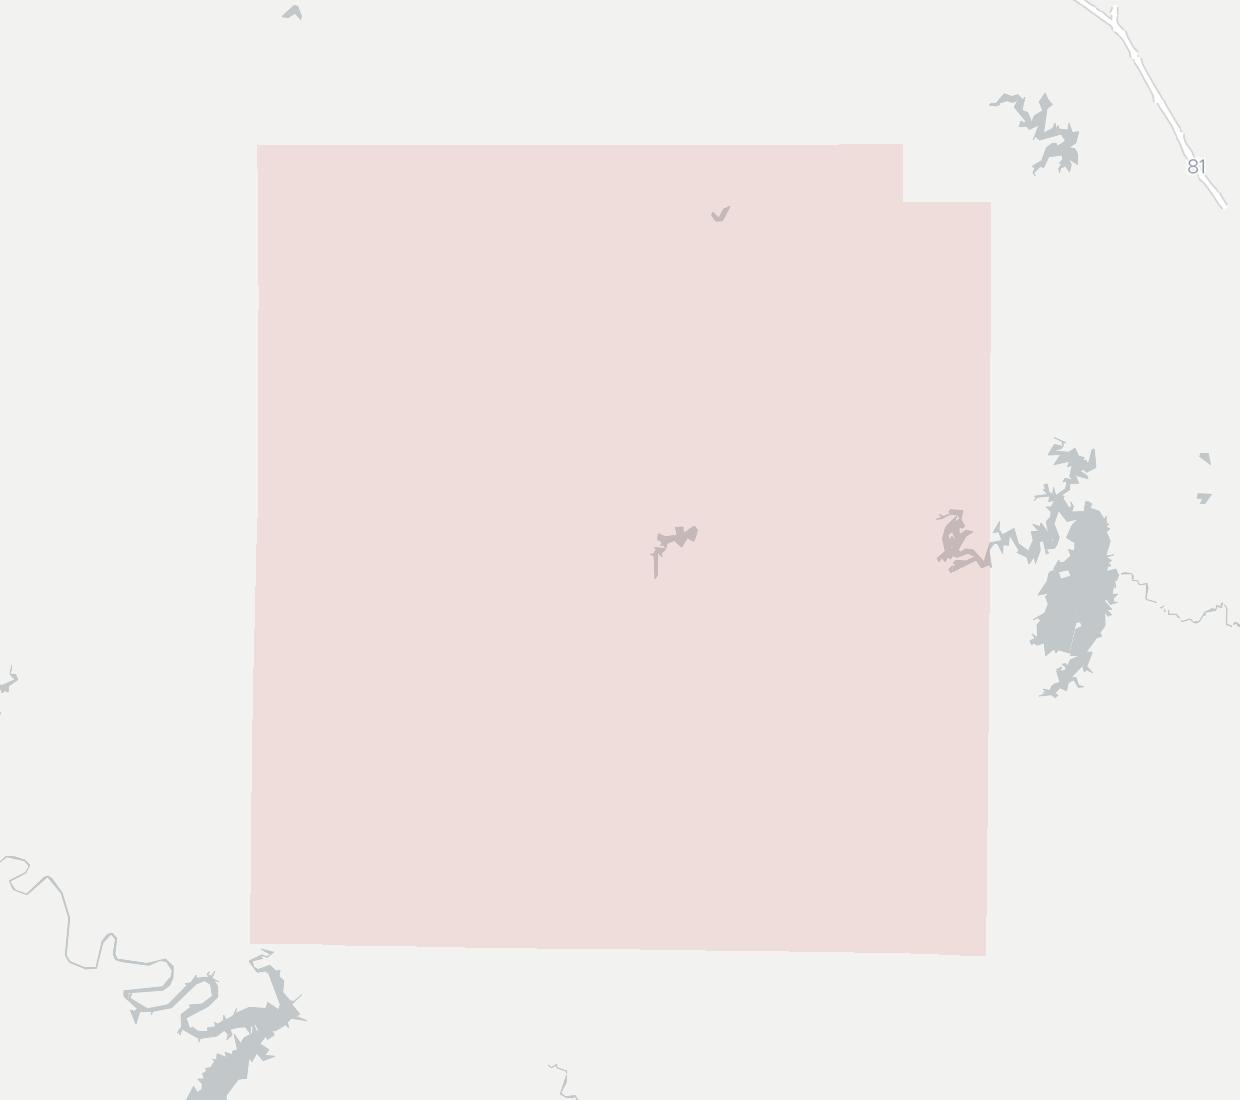 synKro Jacksboro Availability Map. Click for interactive map.